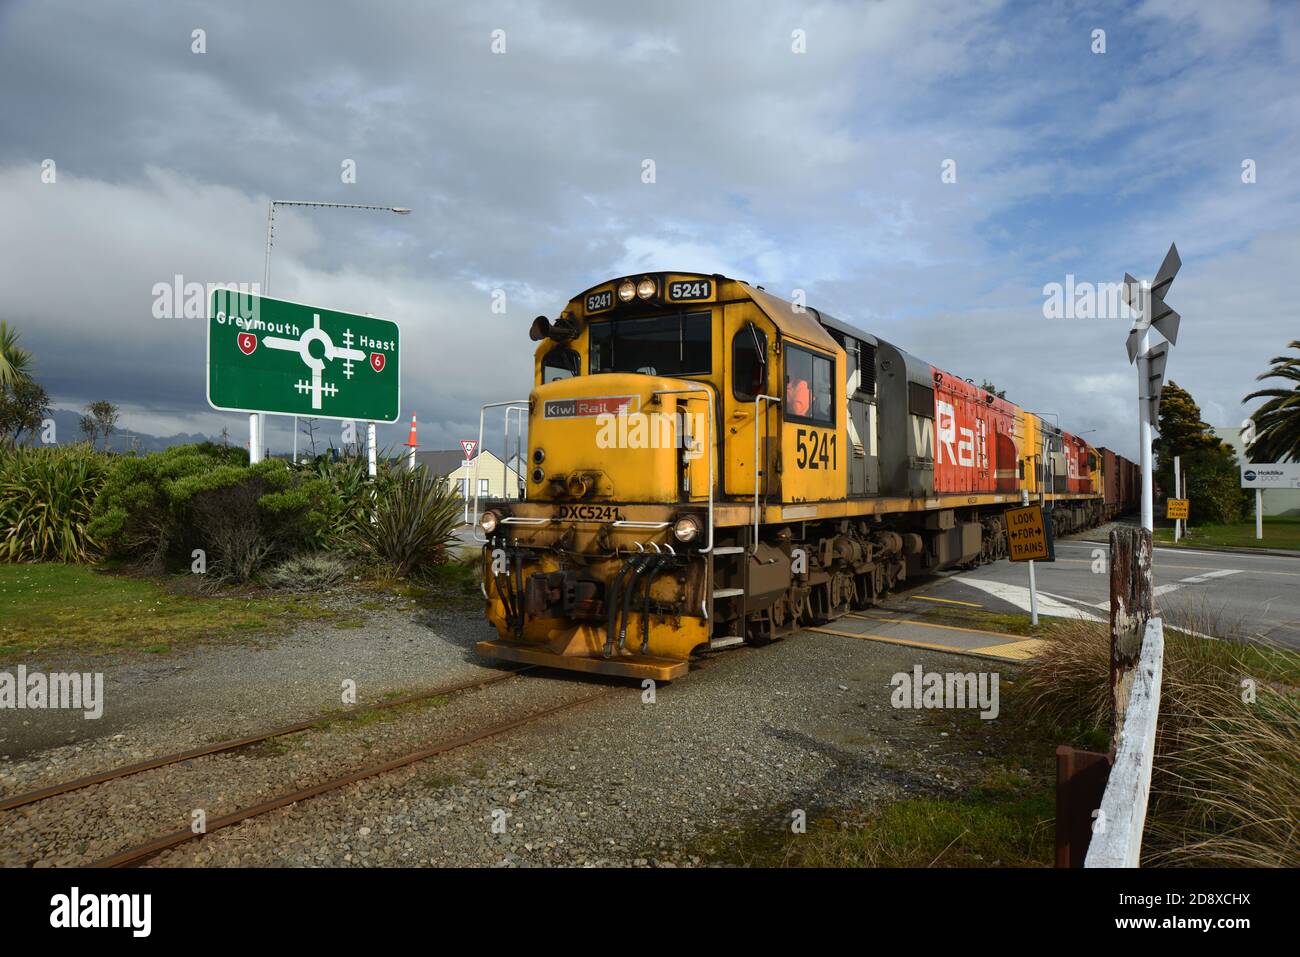 HOKITIKA, NEW ZEALAND, AUGUST 29, 2020: A freight train crosses the main street of Hokitika near the roundabout on State Highway 6. Stock Photo